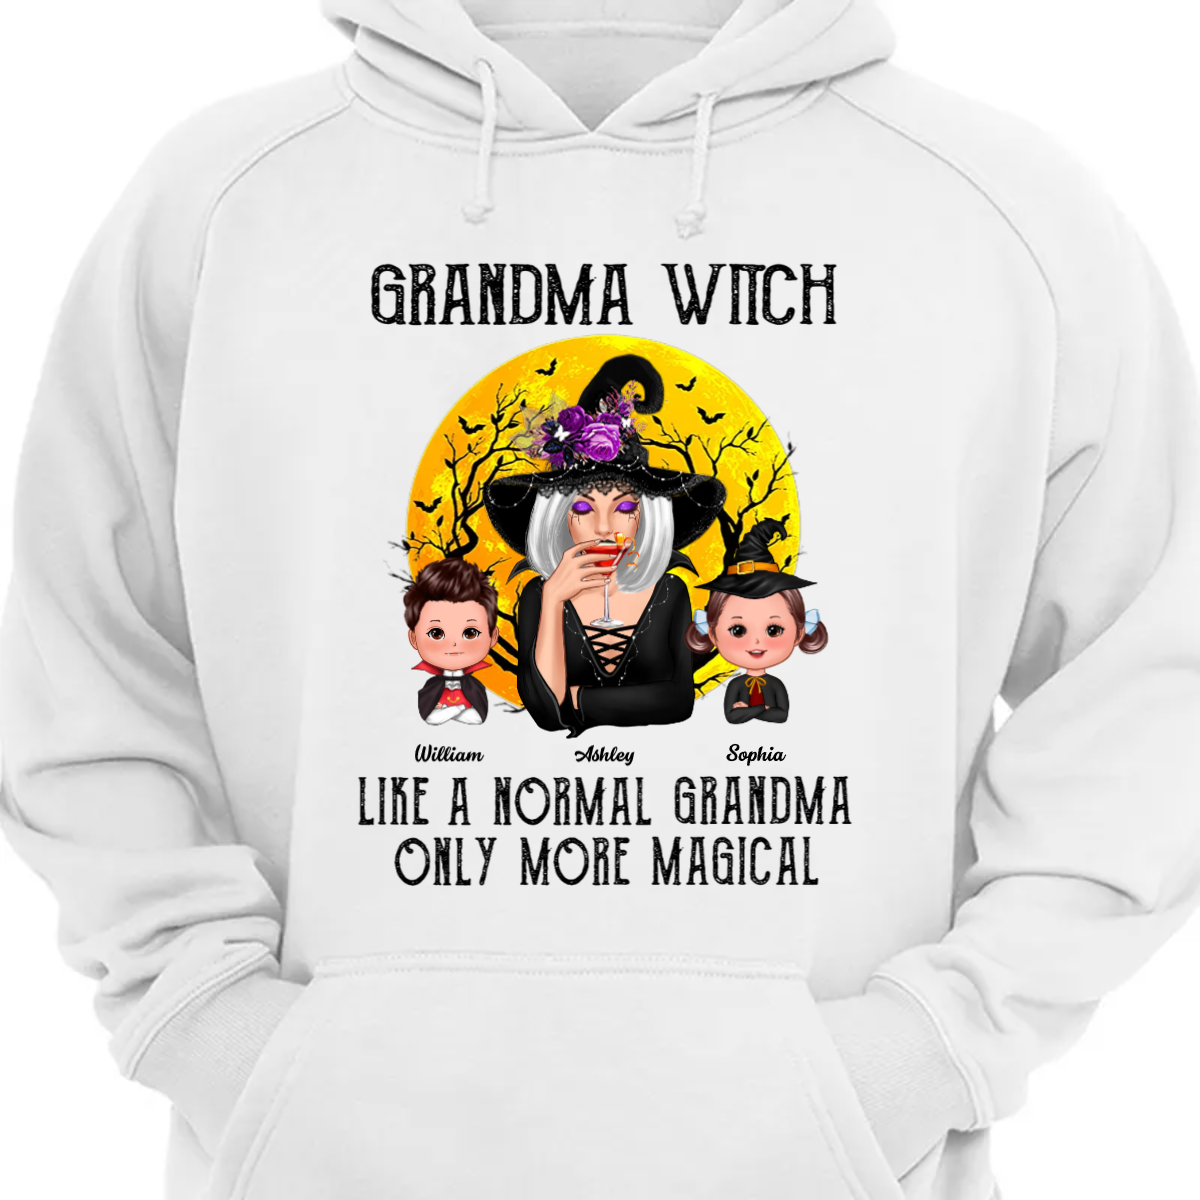 Grandma Witch Like Normal Grandma More Magical Halloween Personalized Hoodie Sweatshirt